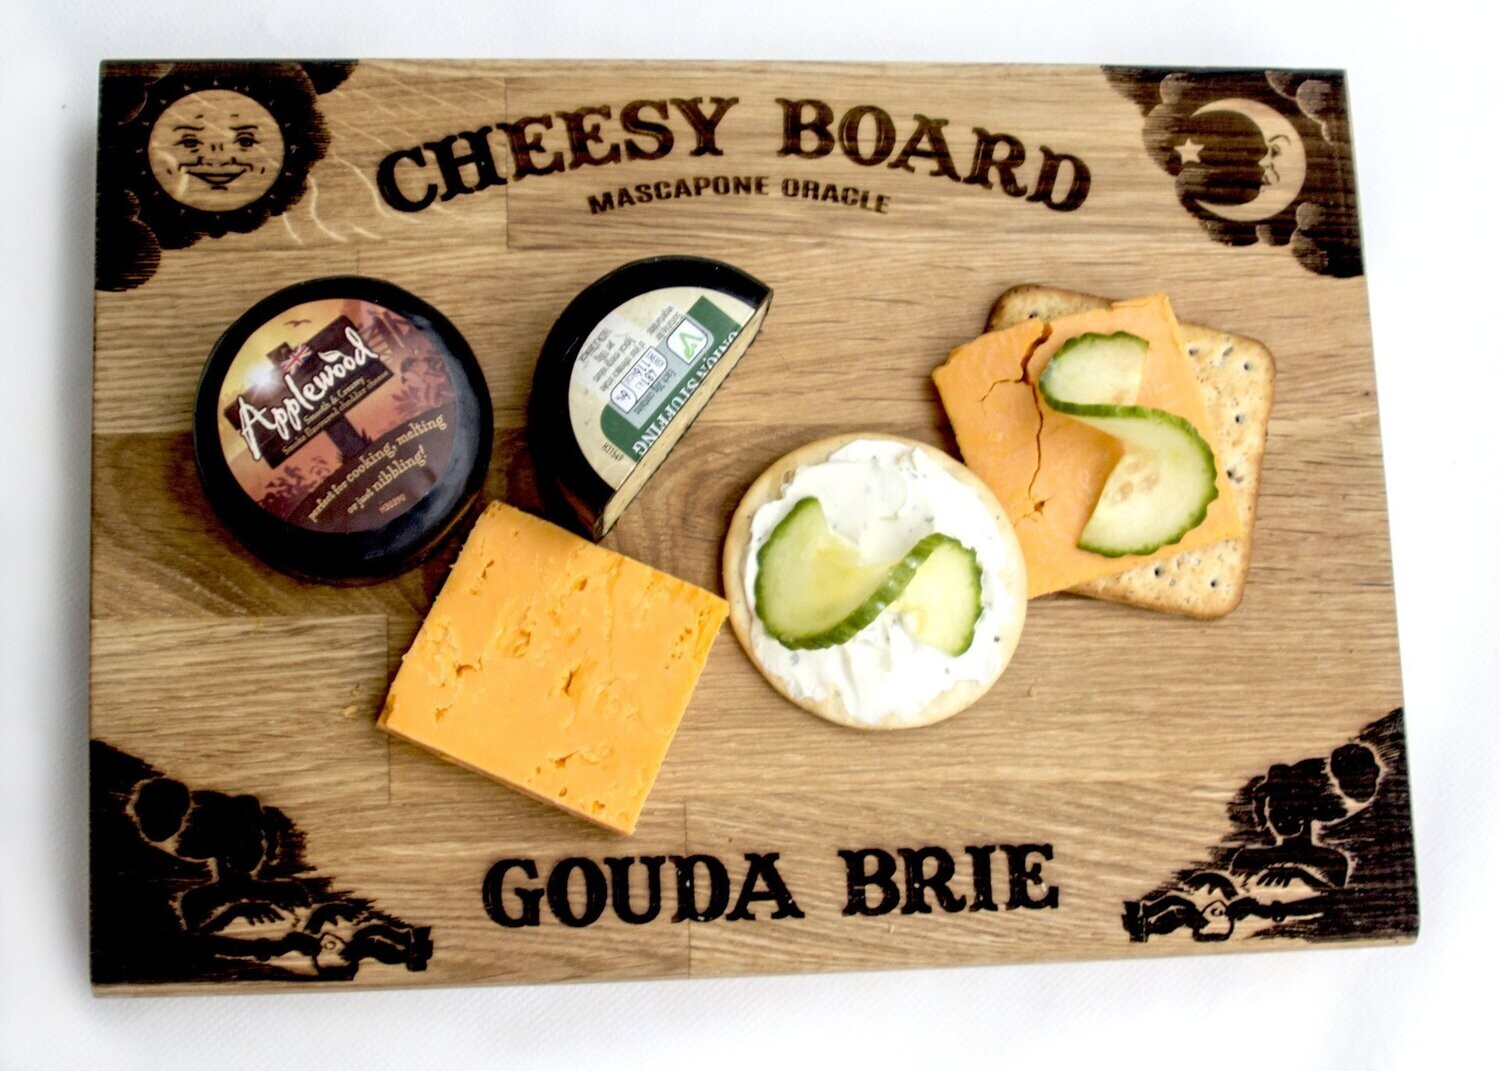 Cheesy Board - Cheese Board - Ouija Cheese Board